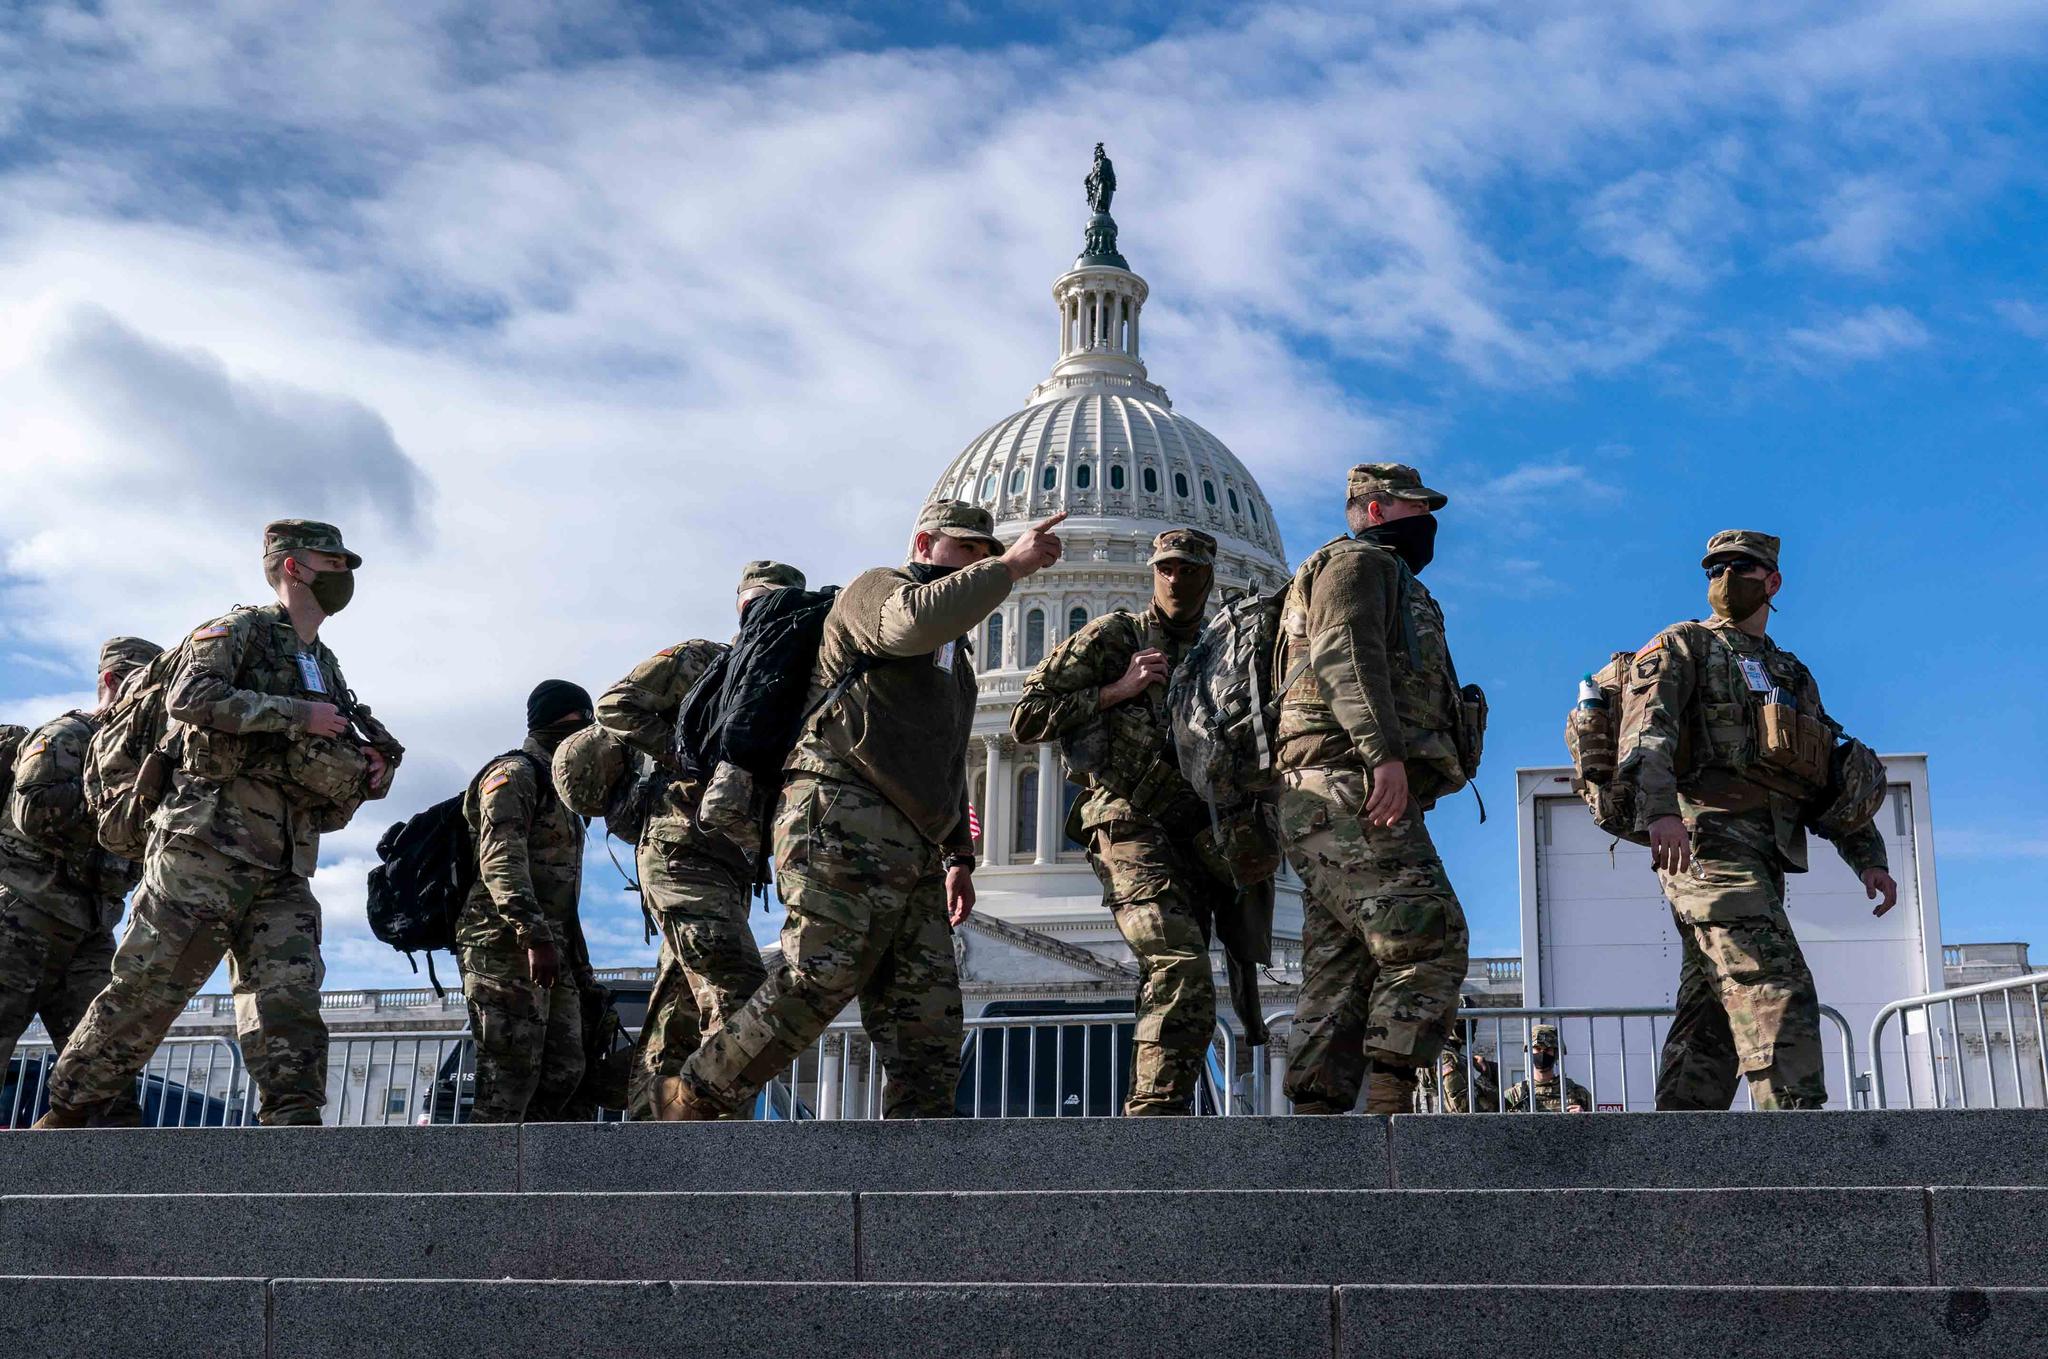 National Guard troops reinforce security around the U.S. Capitol ahead of the inauguration of President-elect Joe Biden and Vice President-elect Kamala Harris, Sunday, Jan. 17, 2021, in Washington.